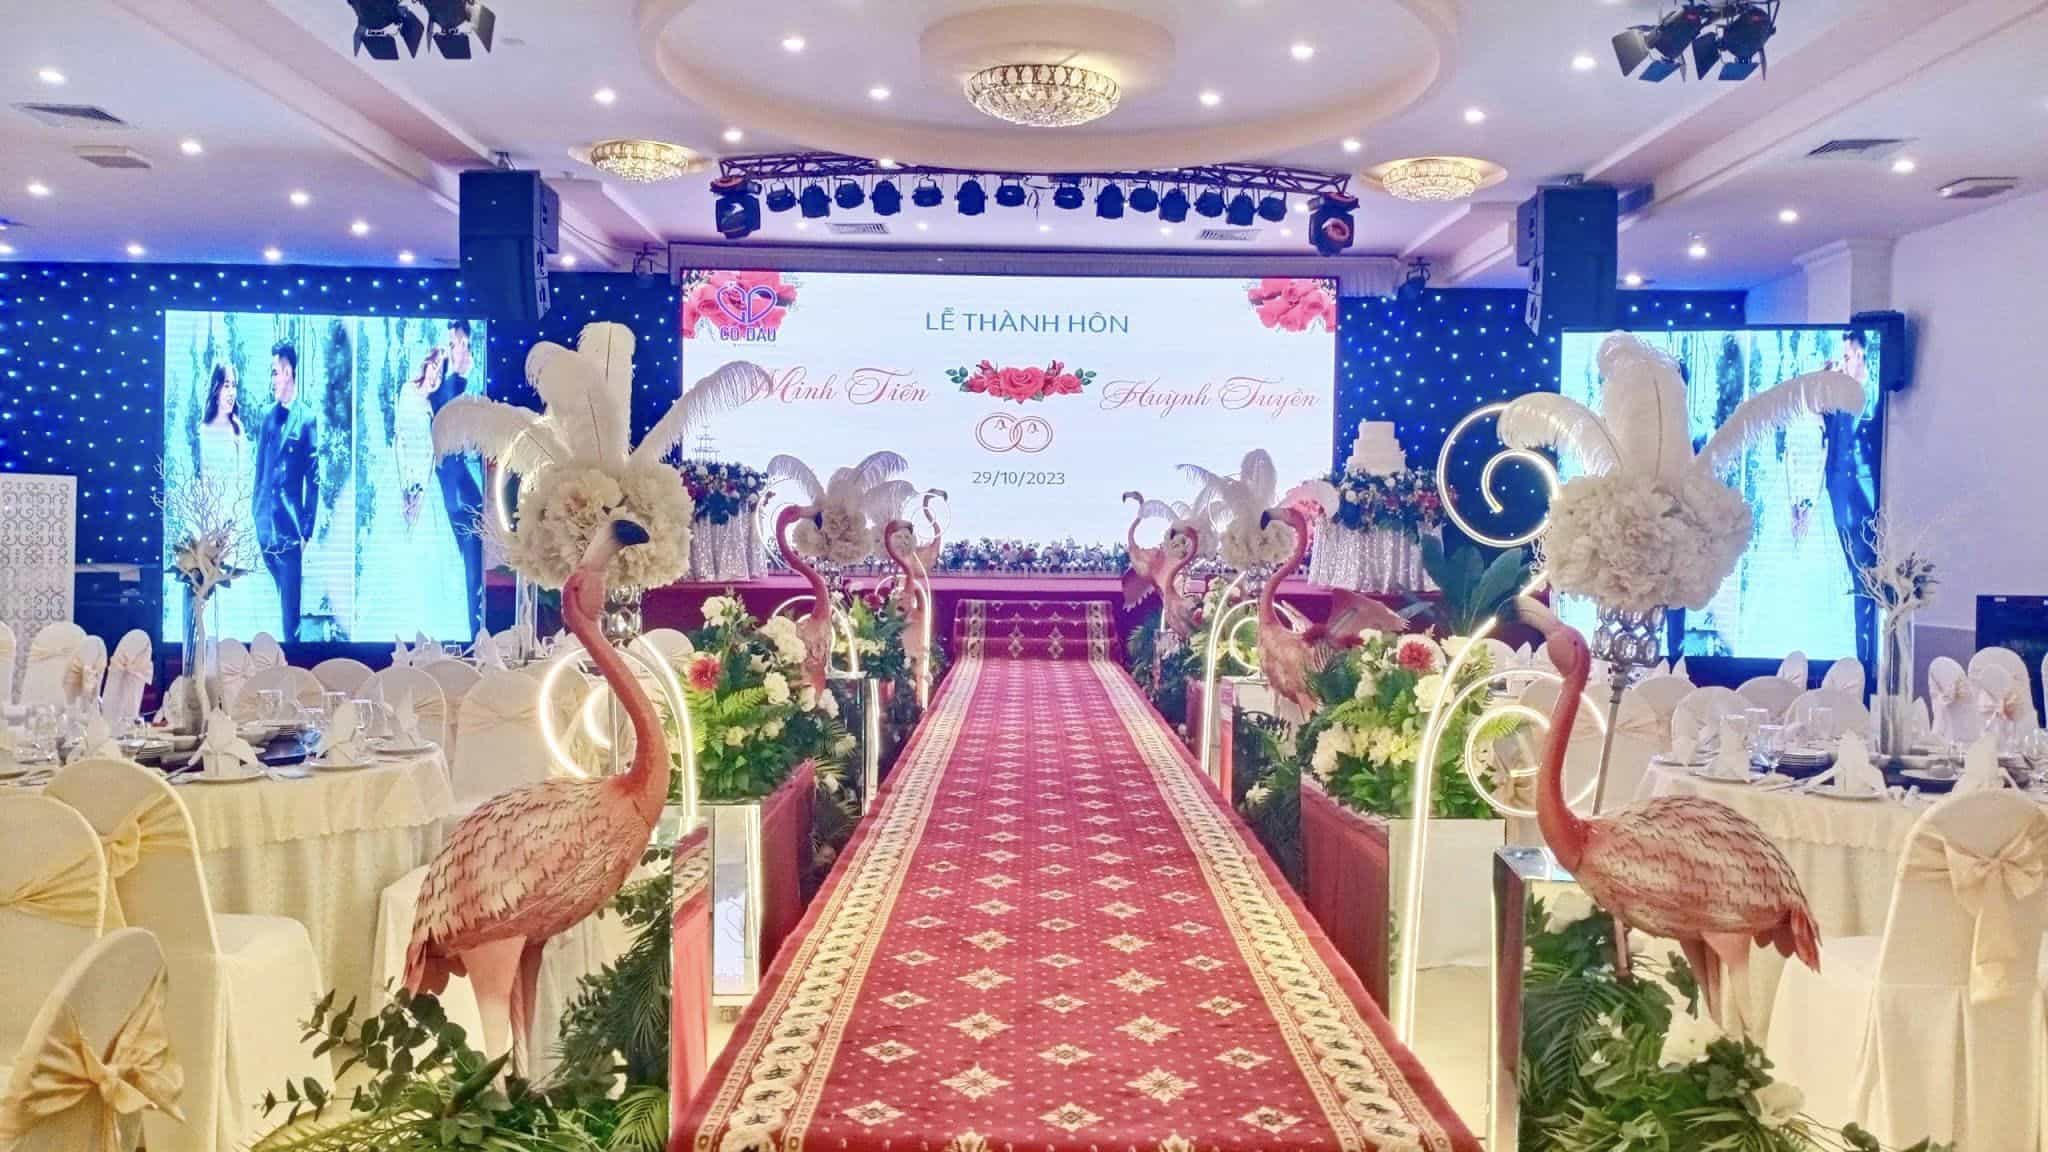 Cọ Dầu Wedding & Convention